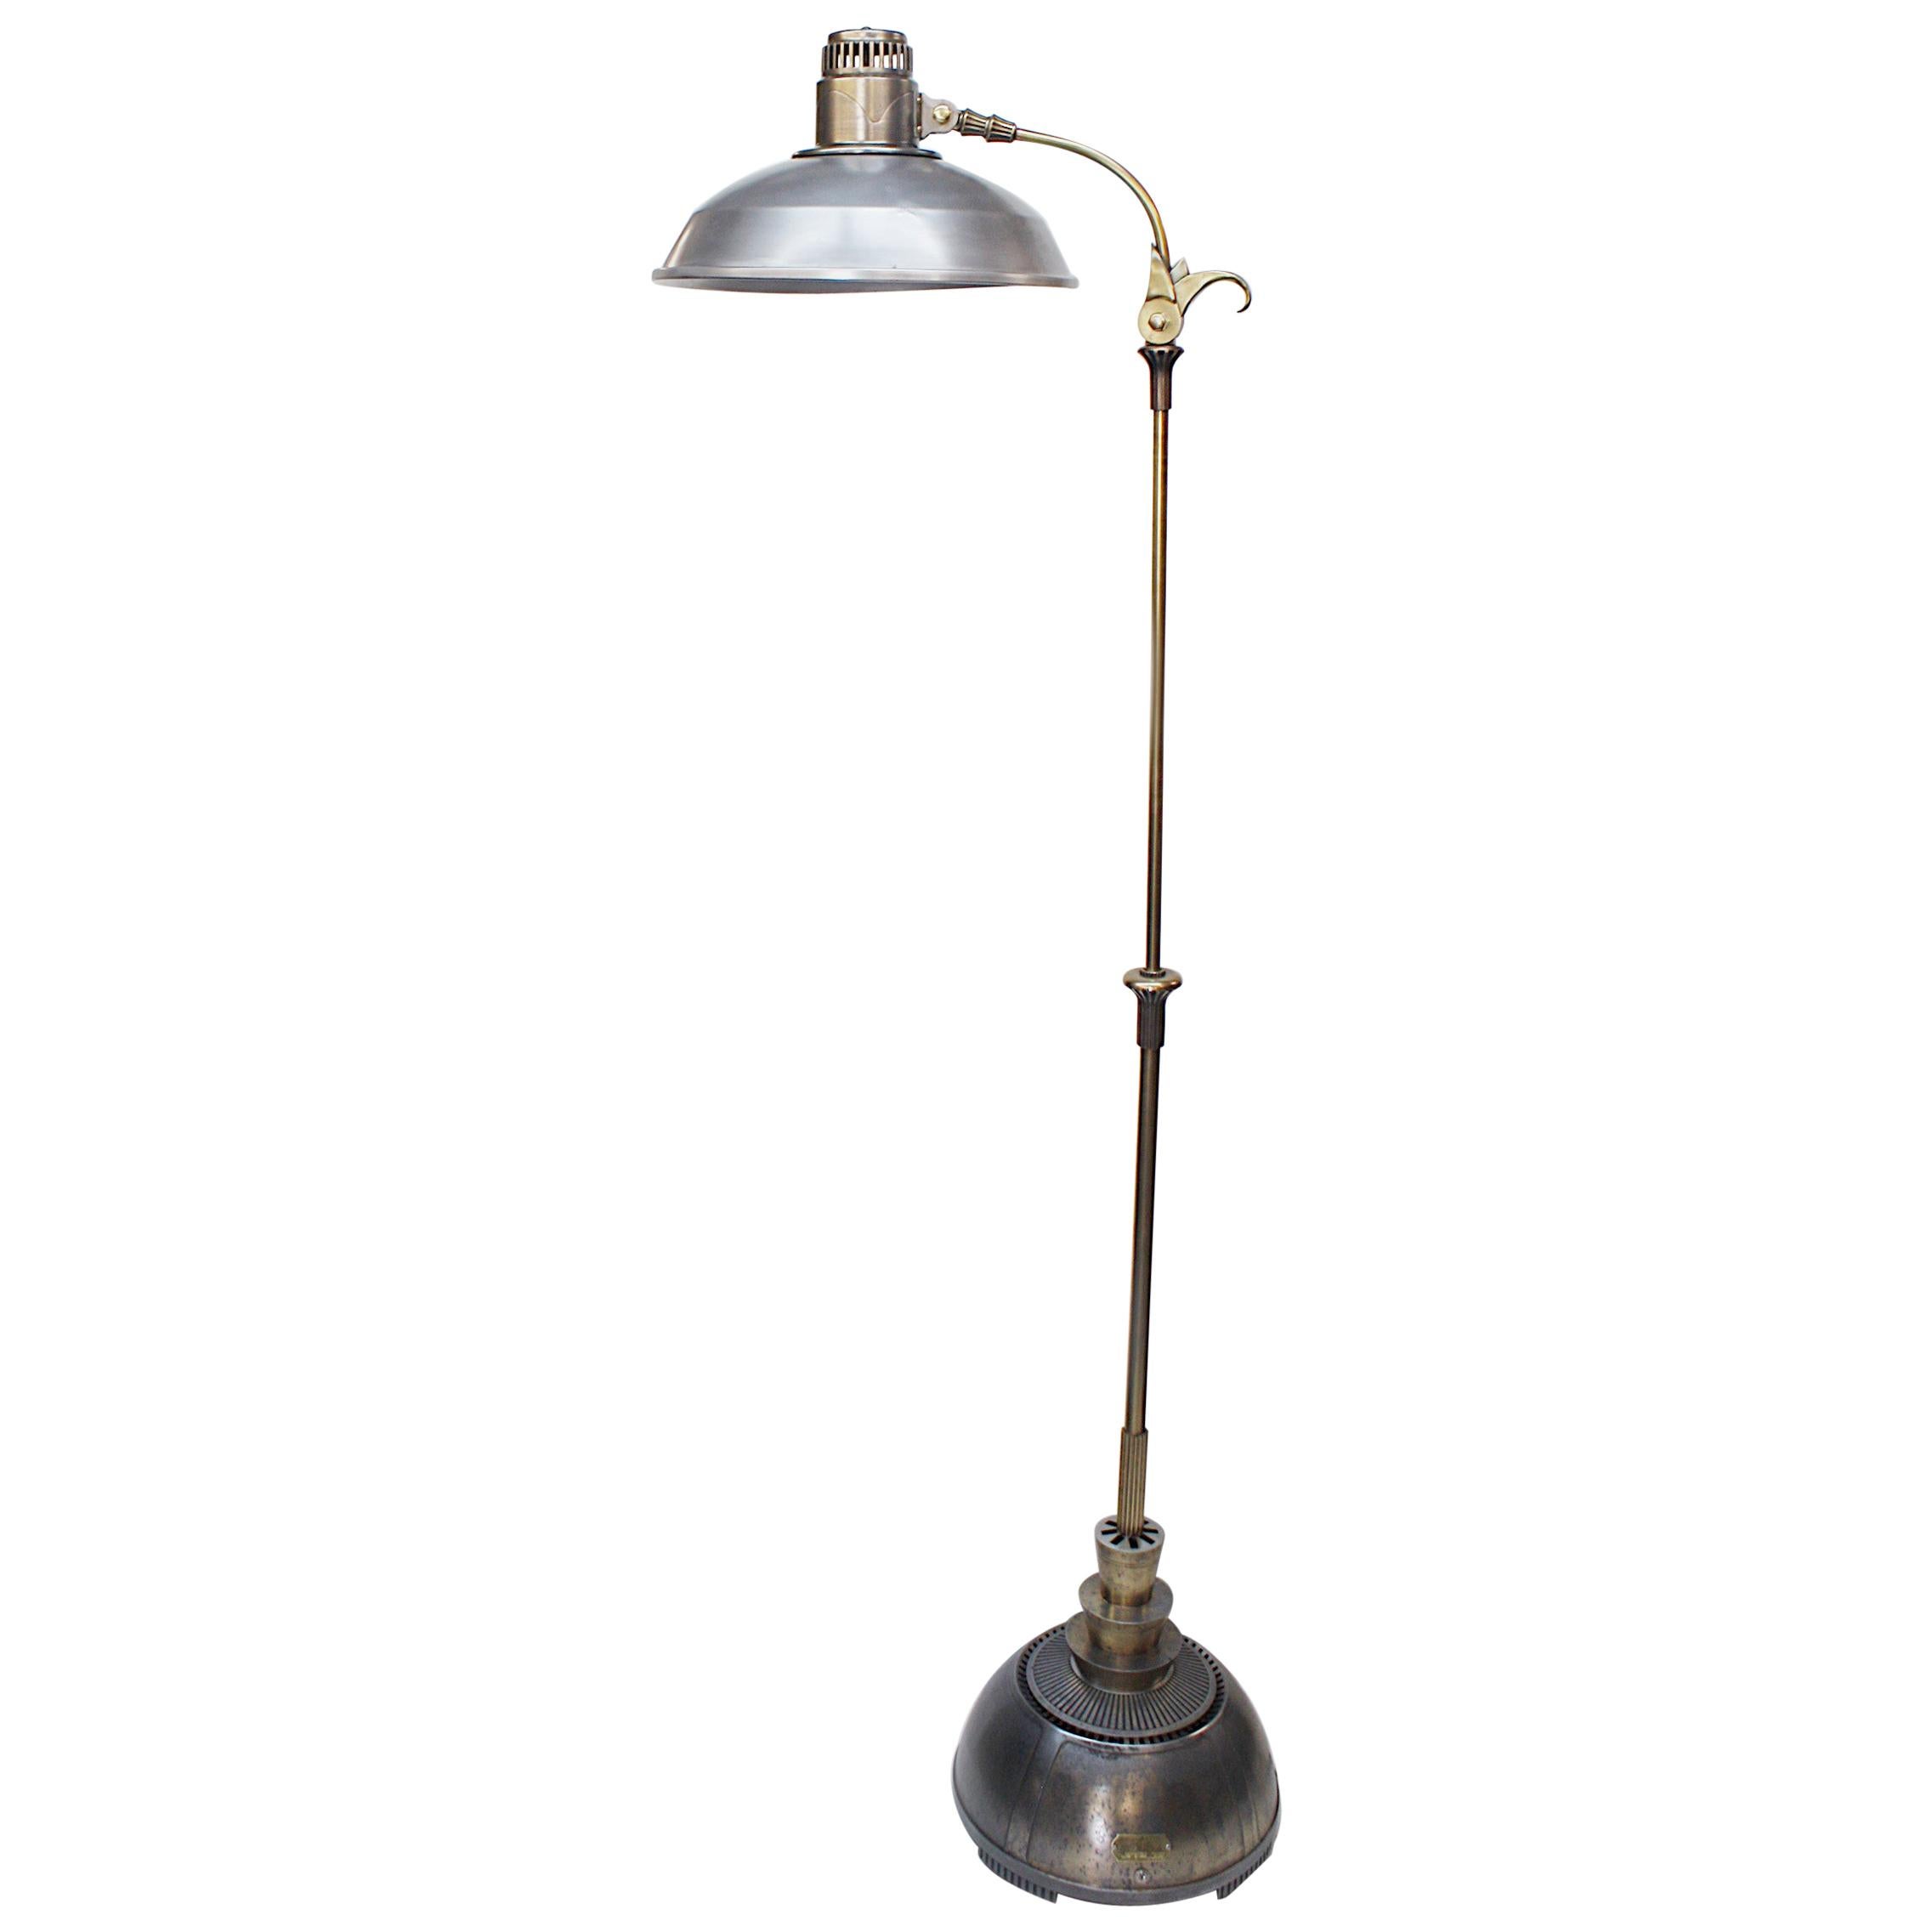 Vintage 1940s Mid-Century Modern Industrial Aluminum GE Sunlamp Floor Lamp